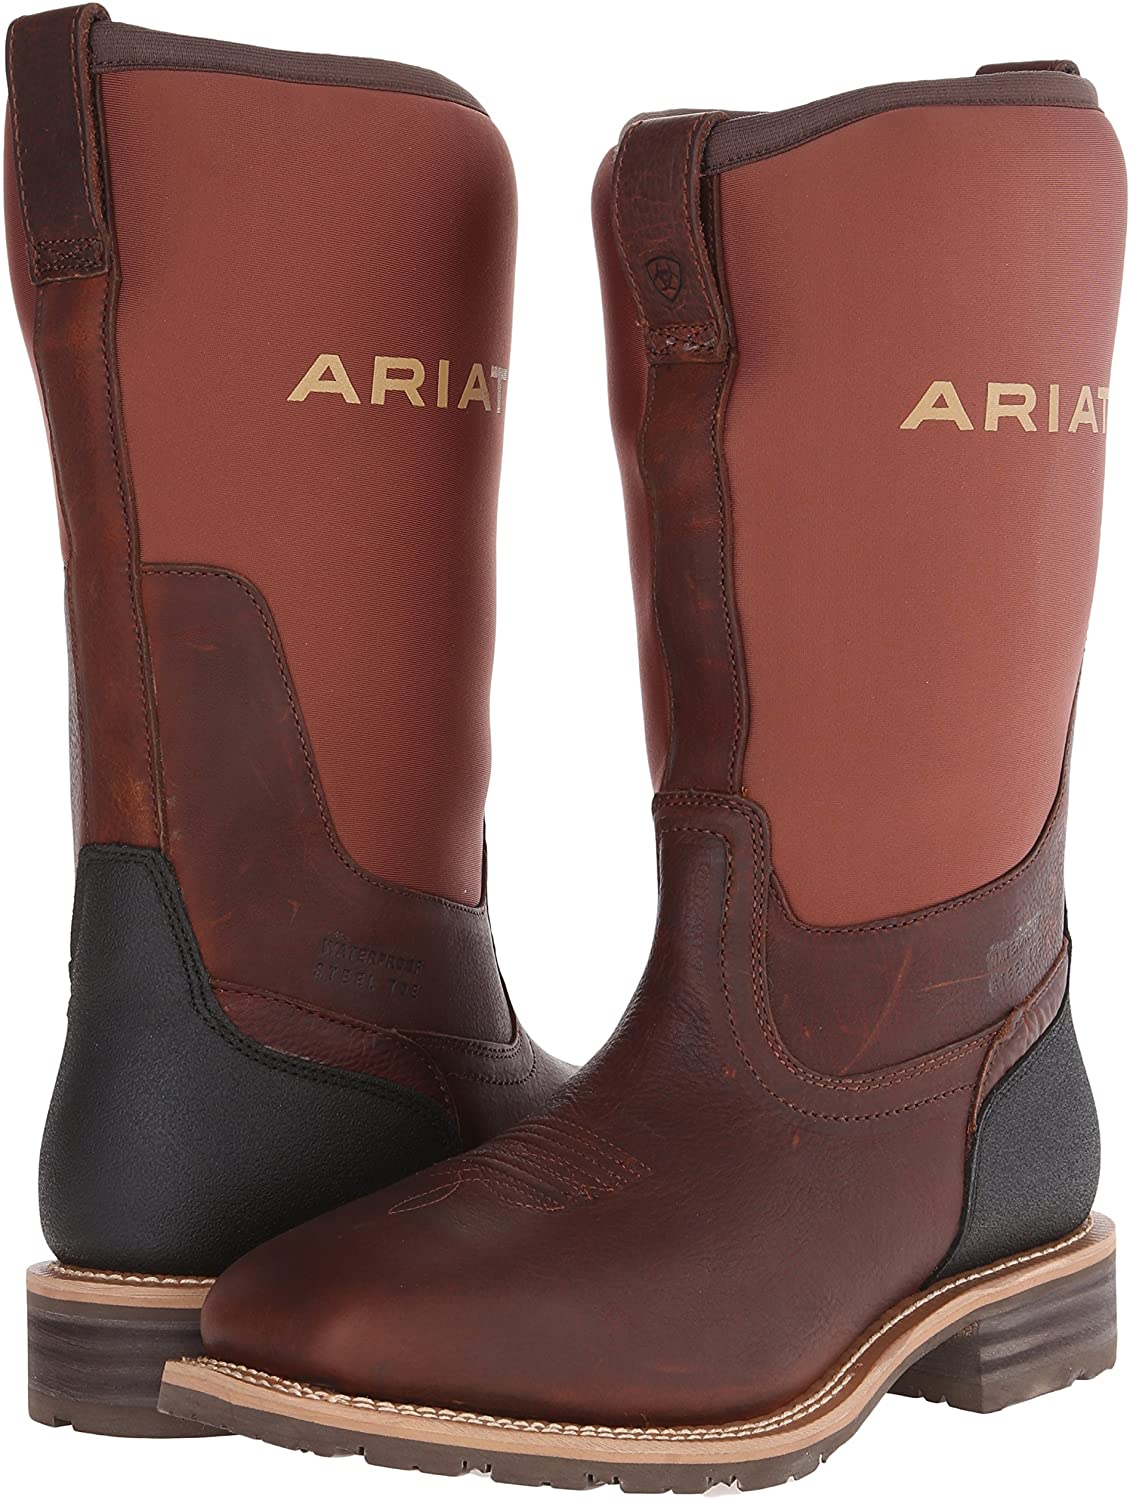 Ariat Hybrid Steel Toe Work Boots